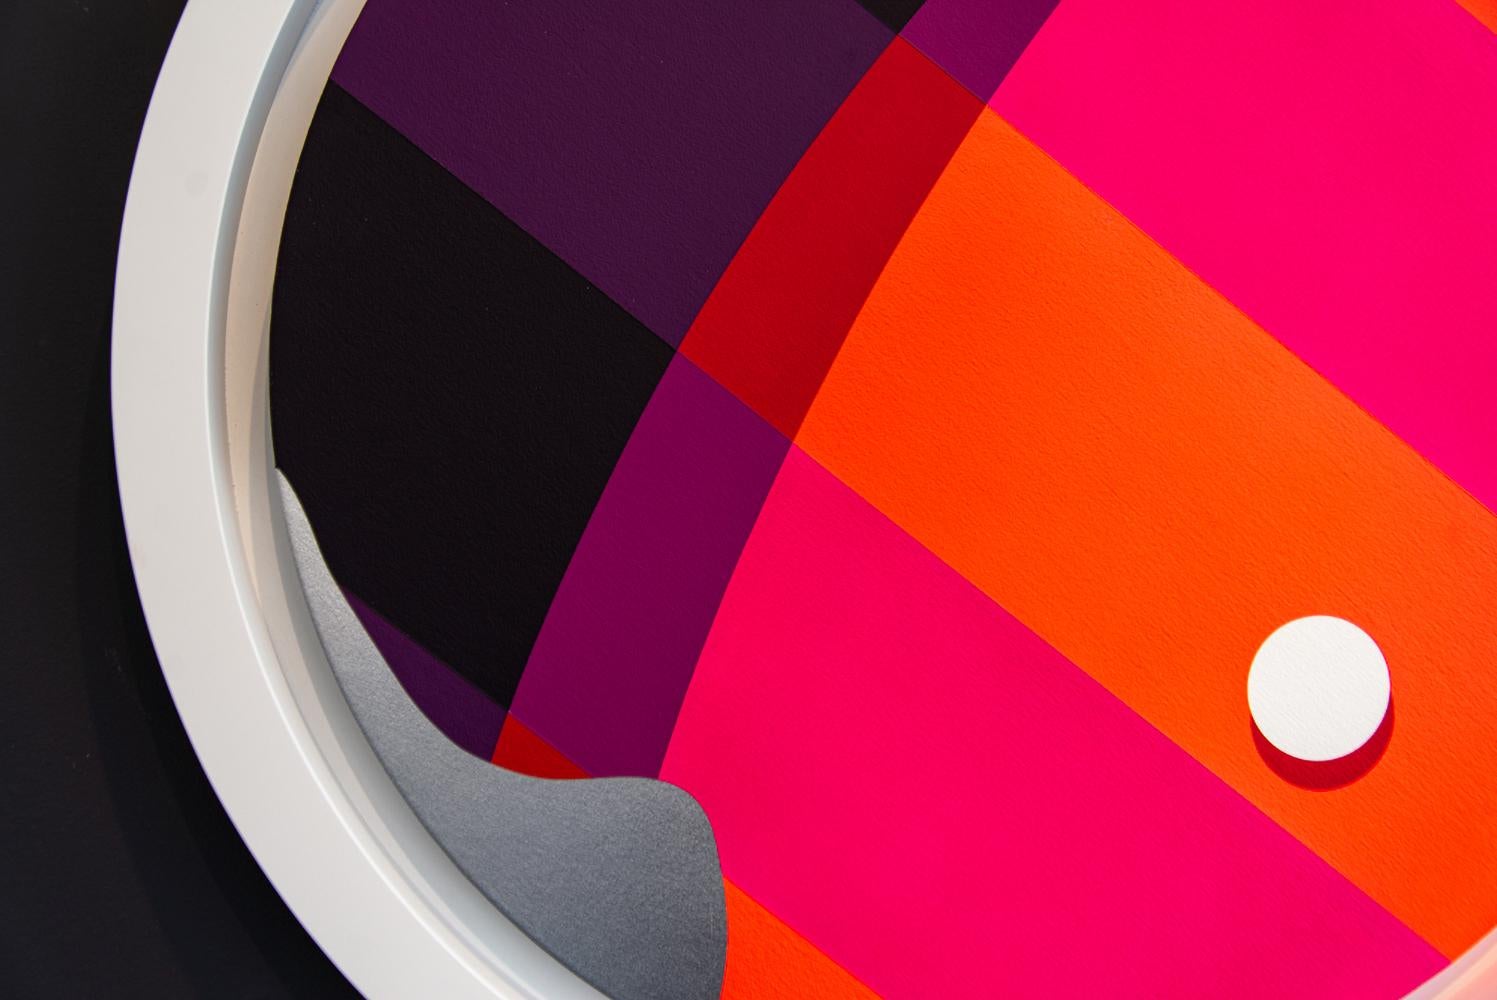 Chromatose - graphic, orange, pink, black, geometric, tondo, acrylic on panel - Painting by Sylvain Louis-Seize